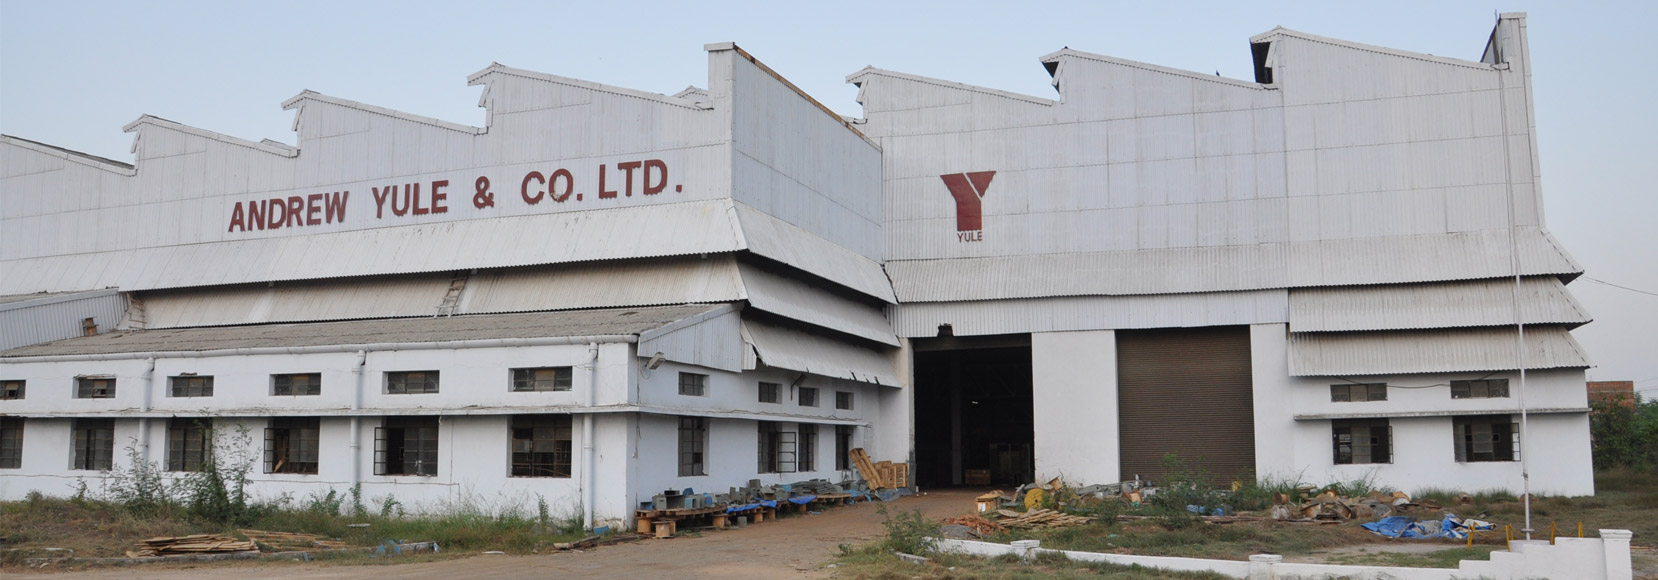 Andrew Yule & Co. Ltd. (Chennai Factory).